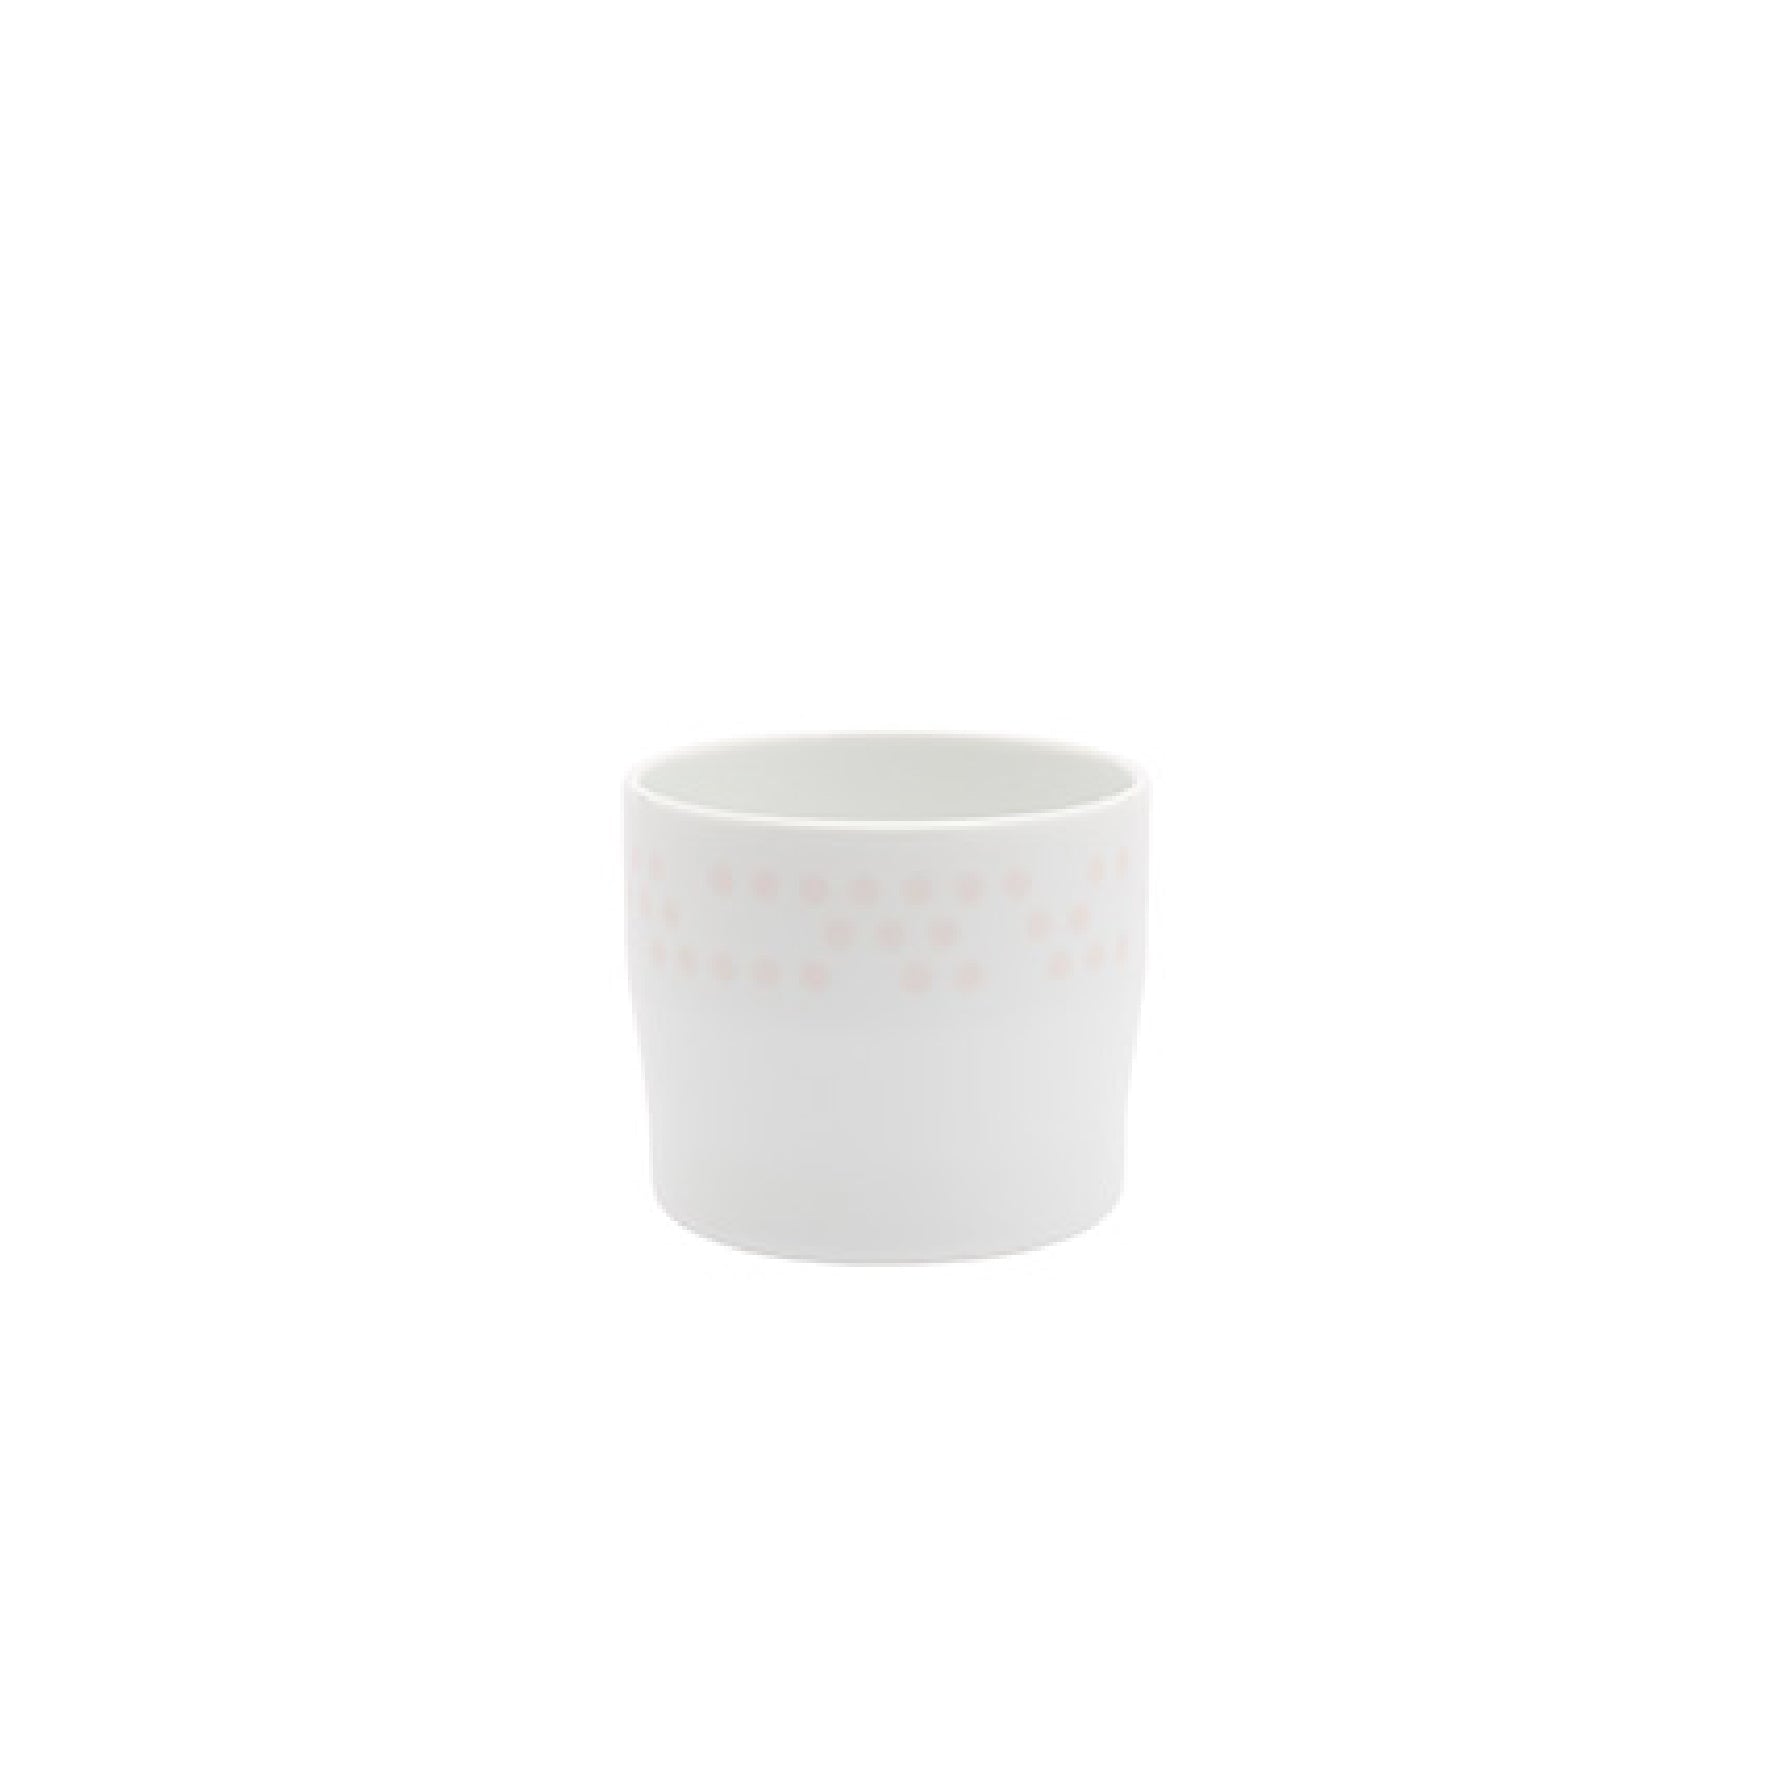 S&B Espresso Cup Light Pink Dots 有田燒 咖啡杯 茶杯 1616 / arita japan